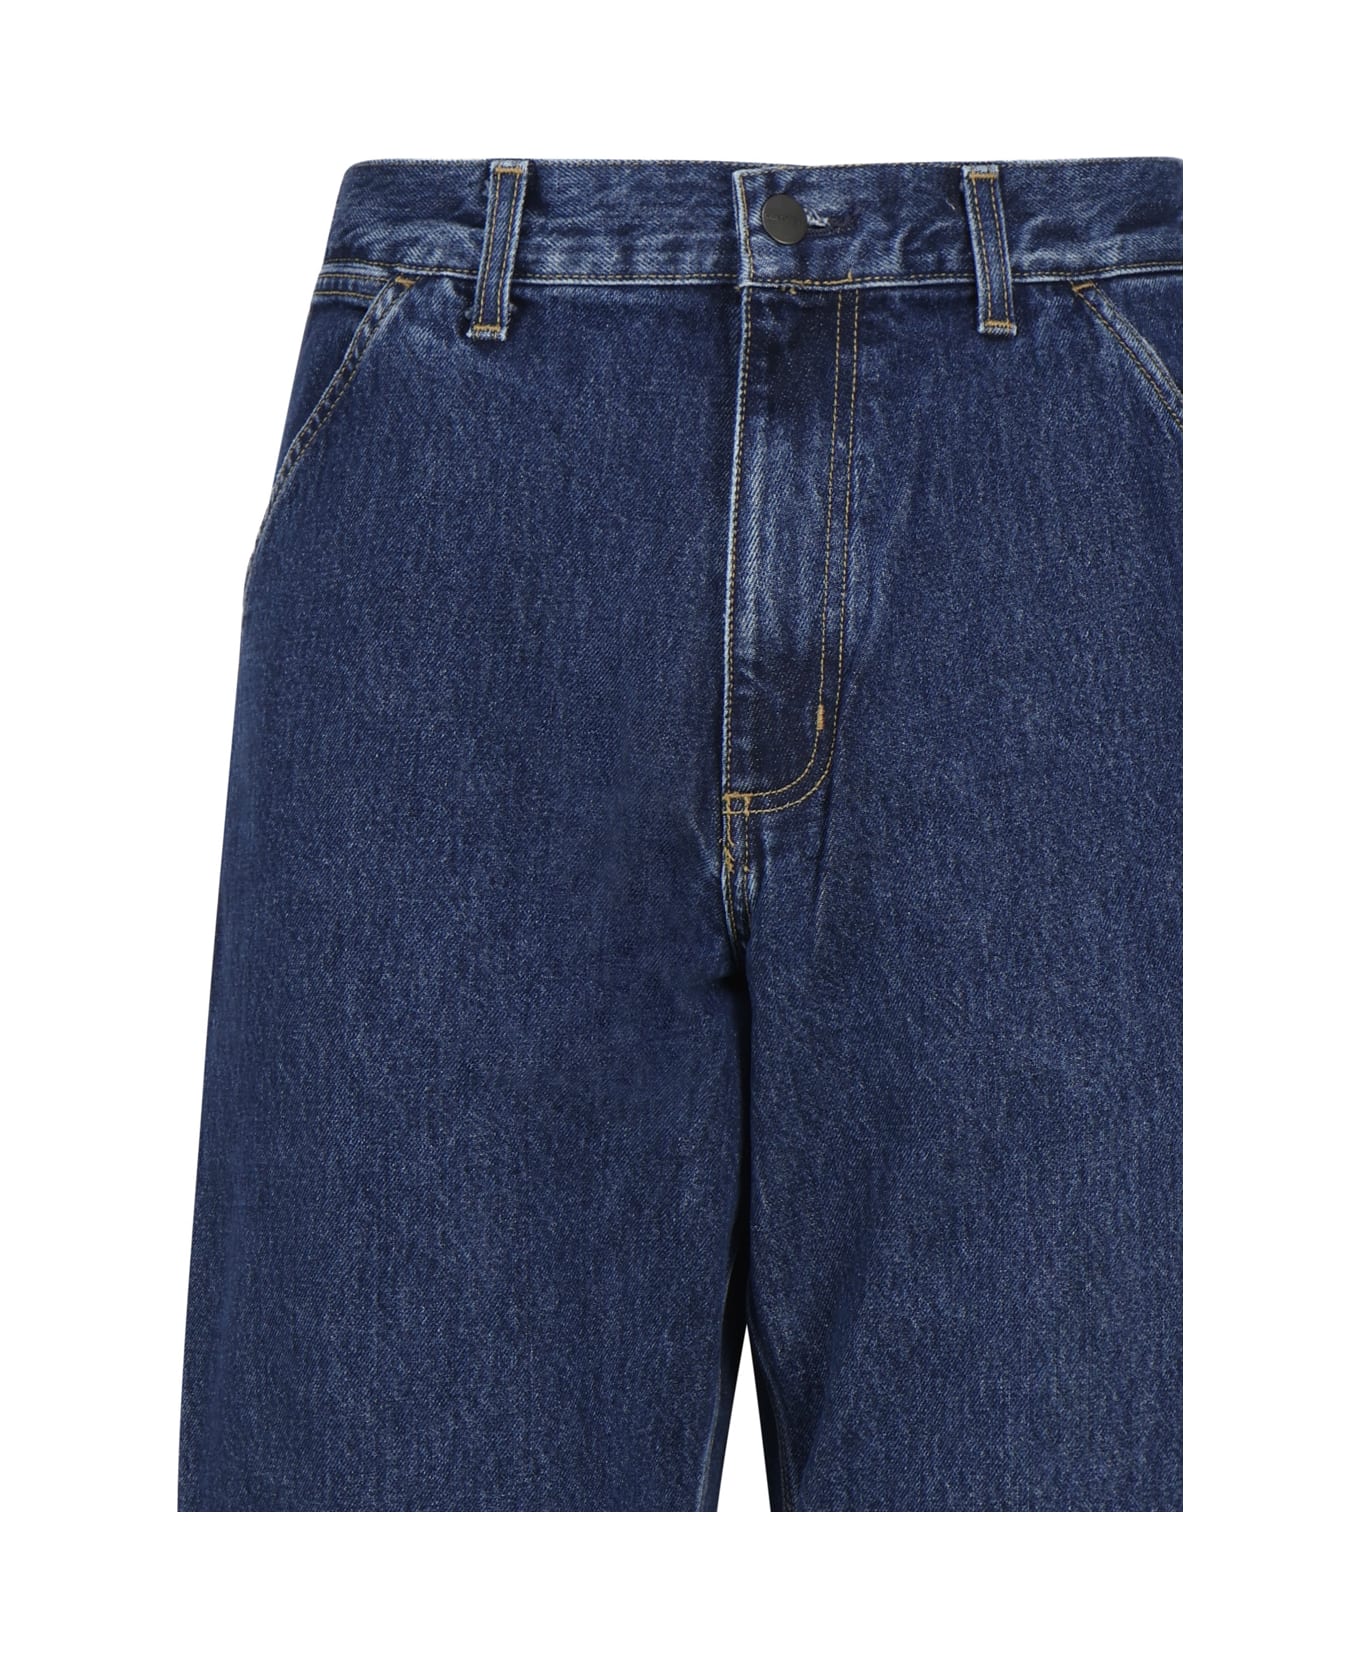 Carhartt Single Knee Jeans - Blue /stone washed